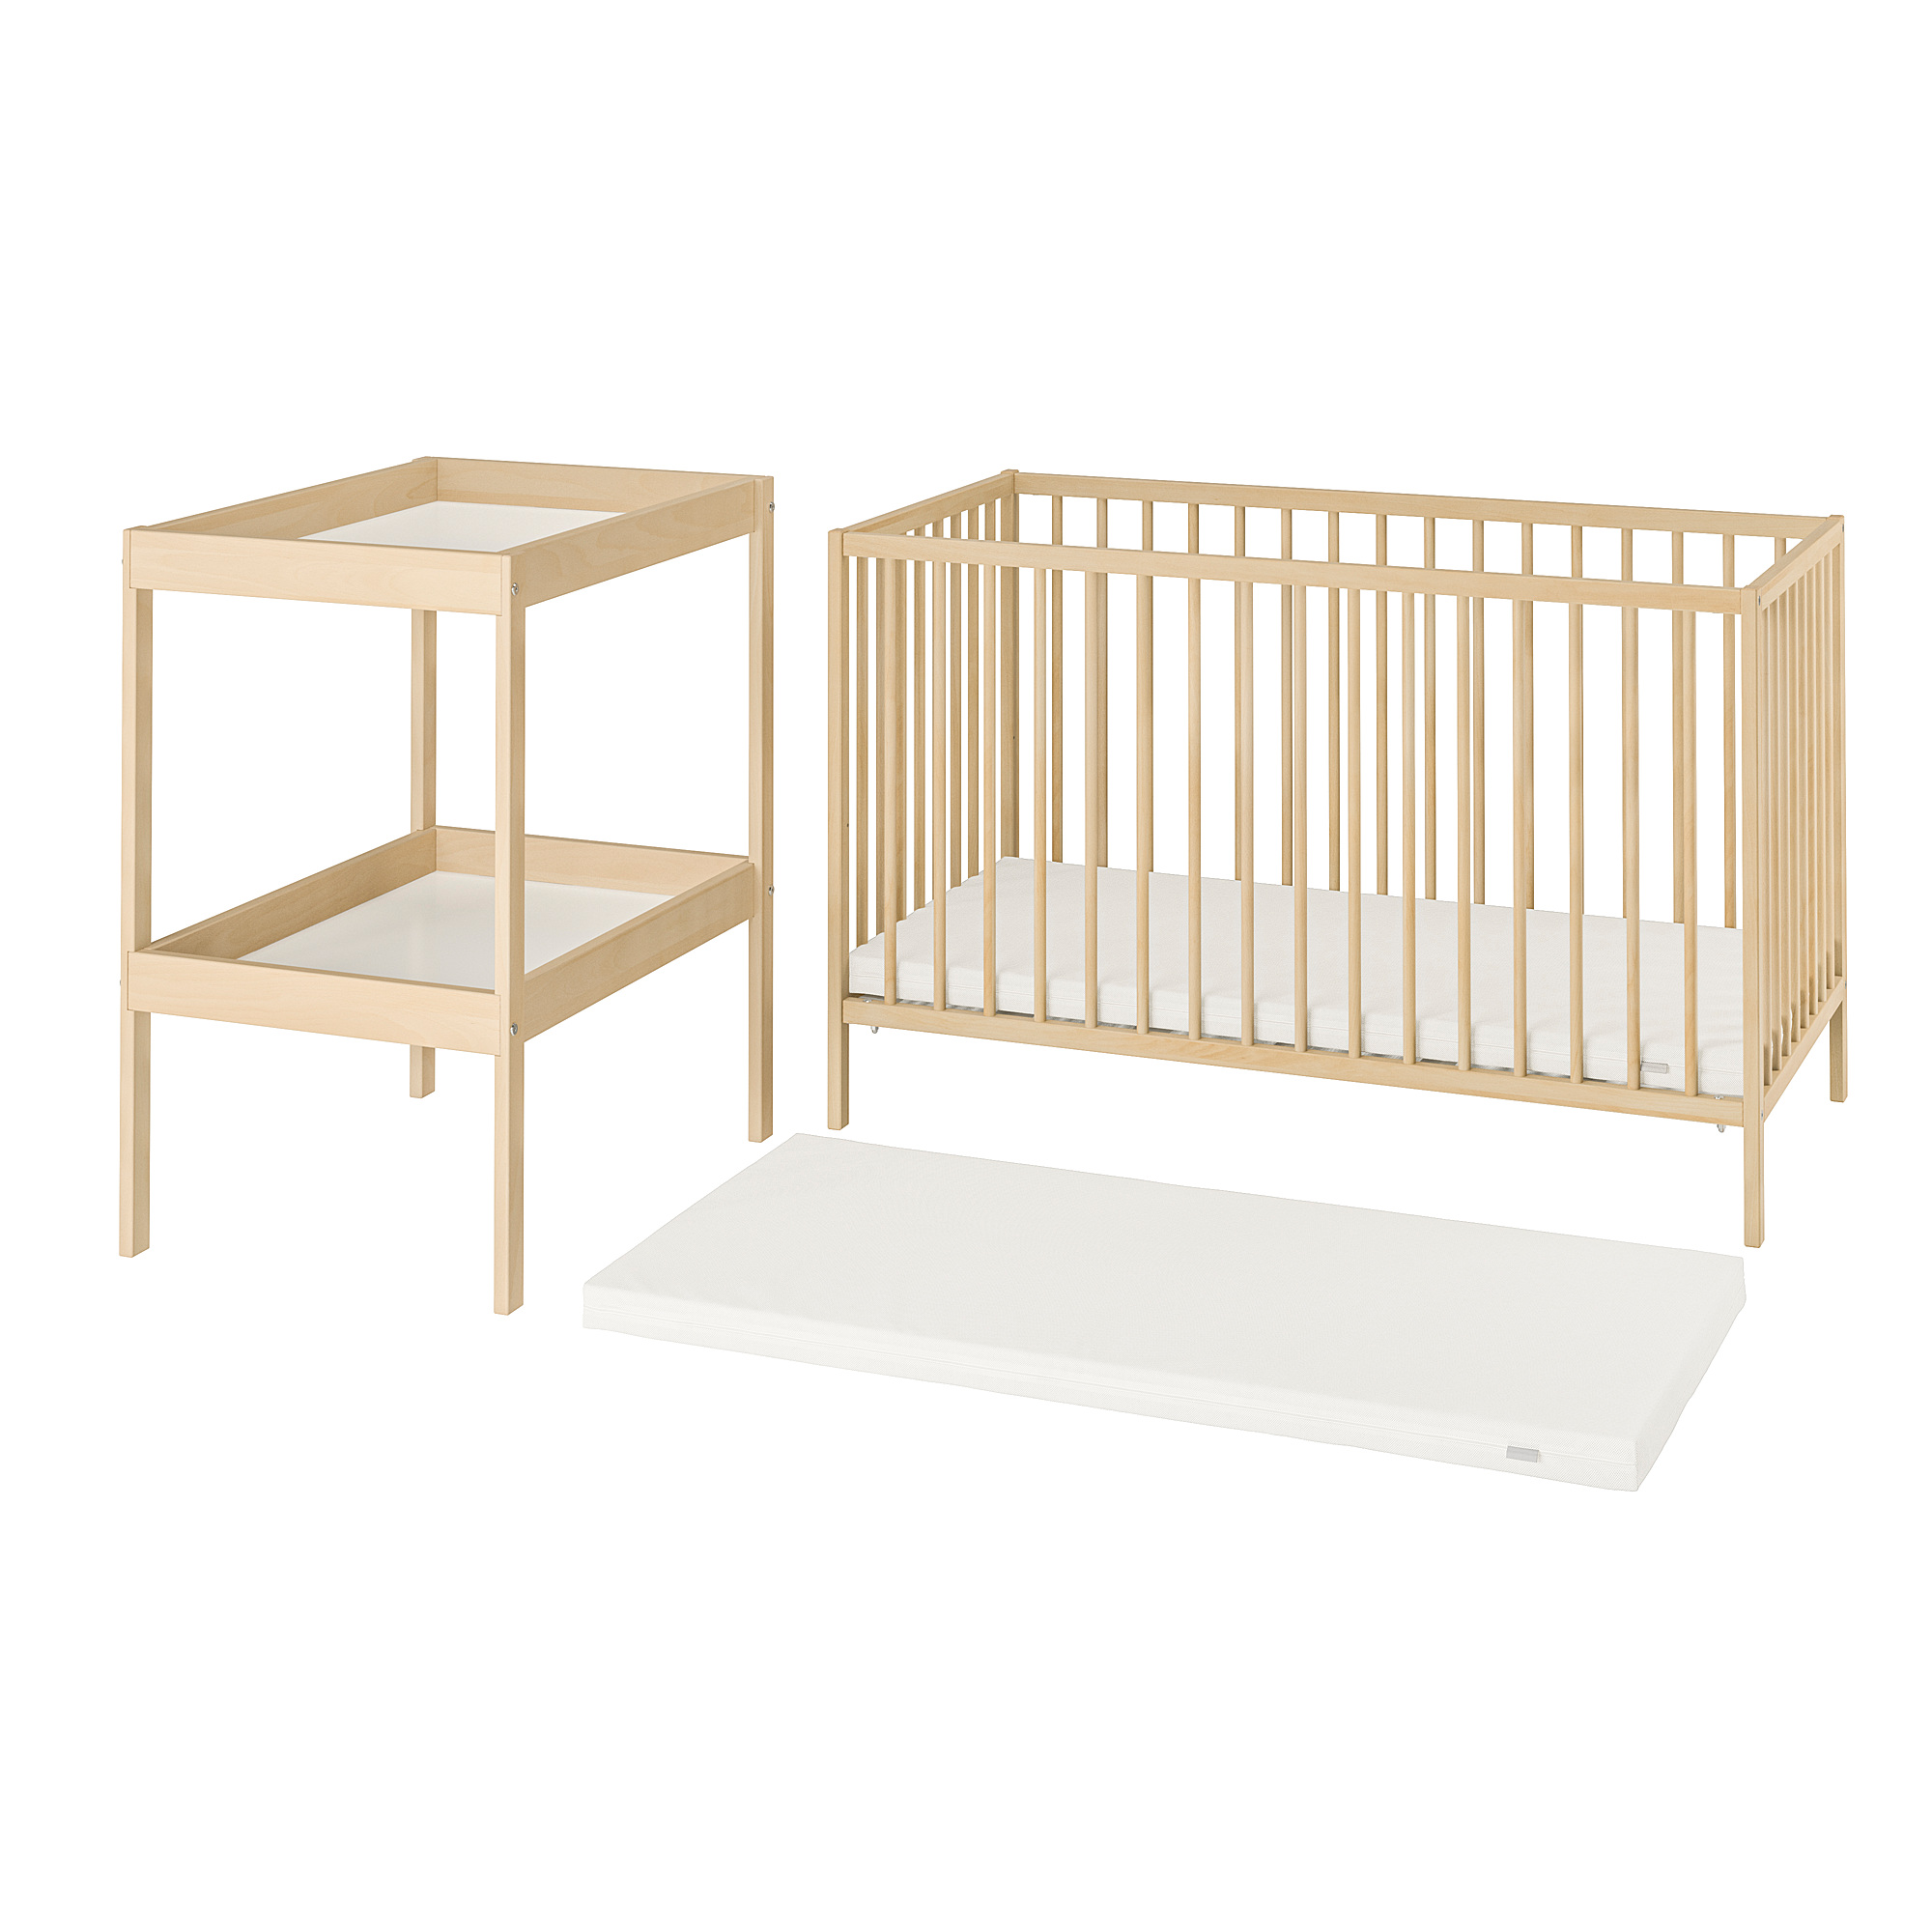 SNIGLAR 3-piece baby furniture set